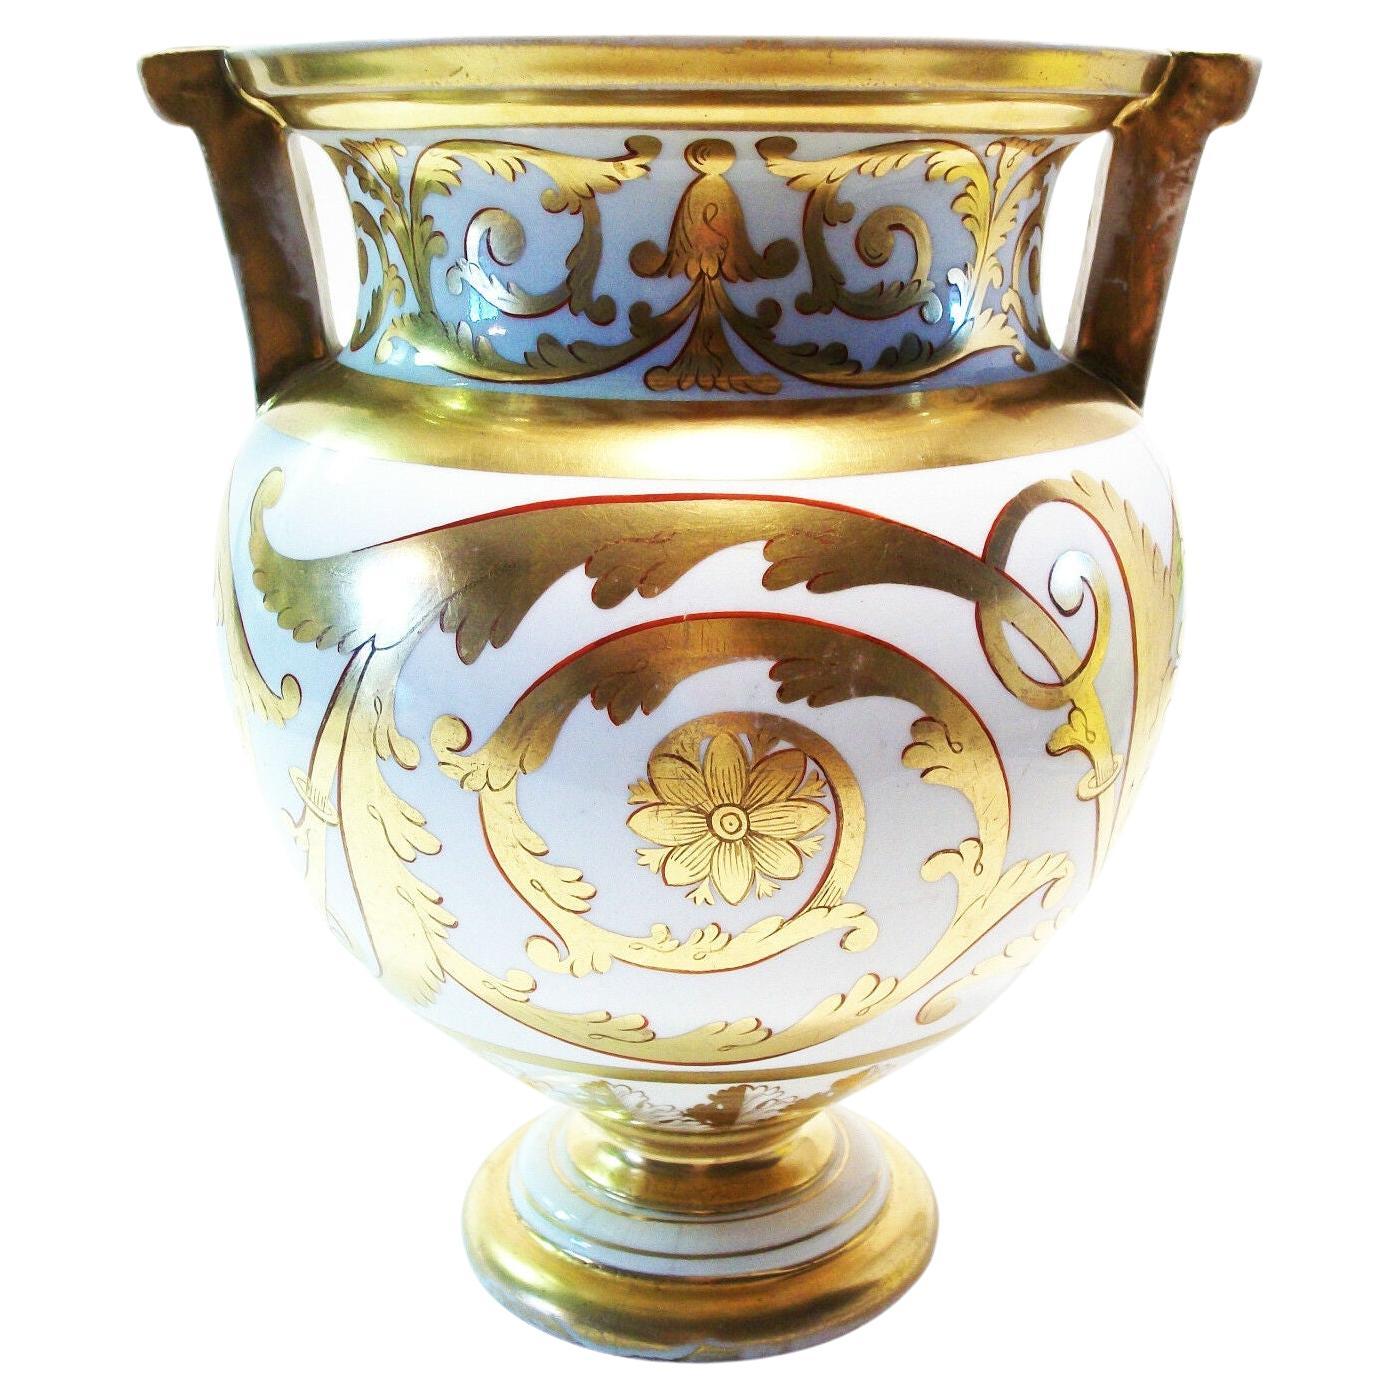 Spode, Rare Antique Gilt Porcelain Low Scent Jar, Pattern No. 671, circa 1805